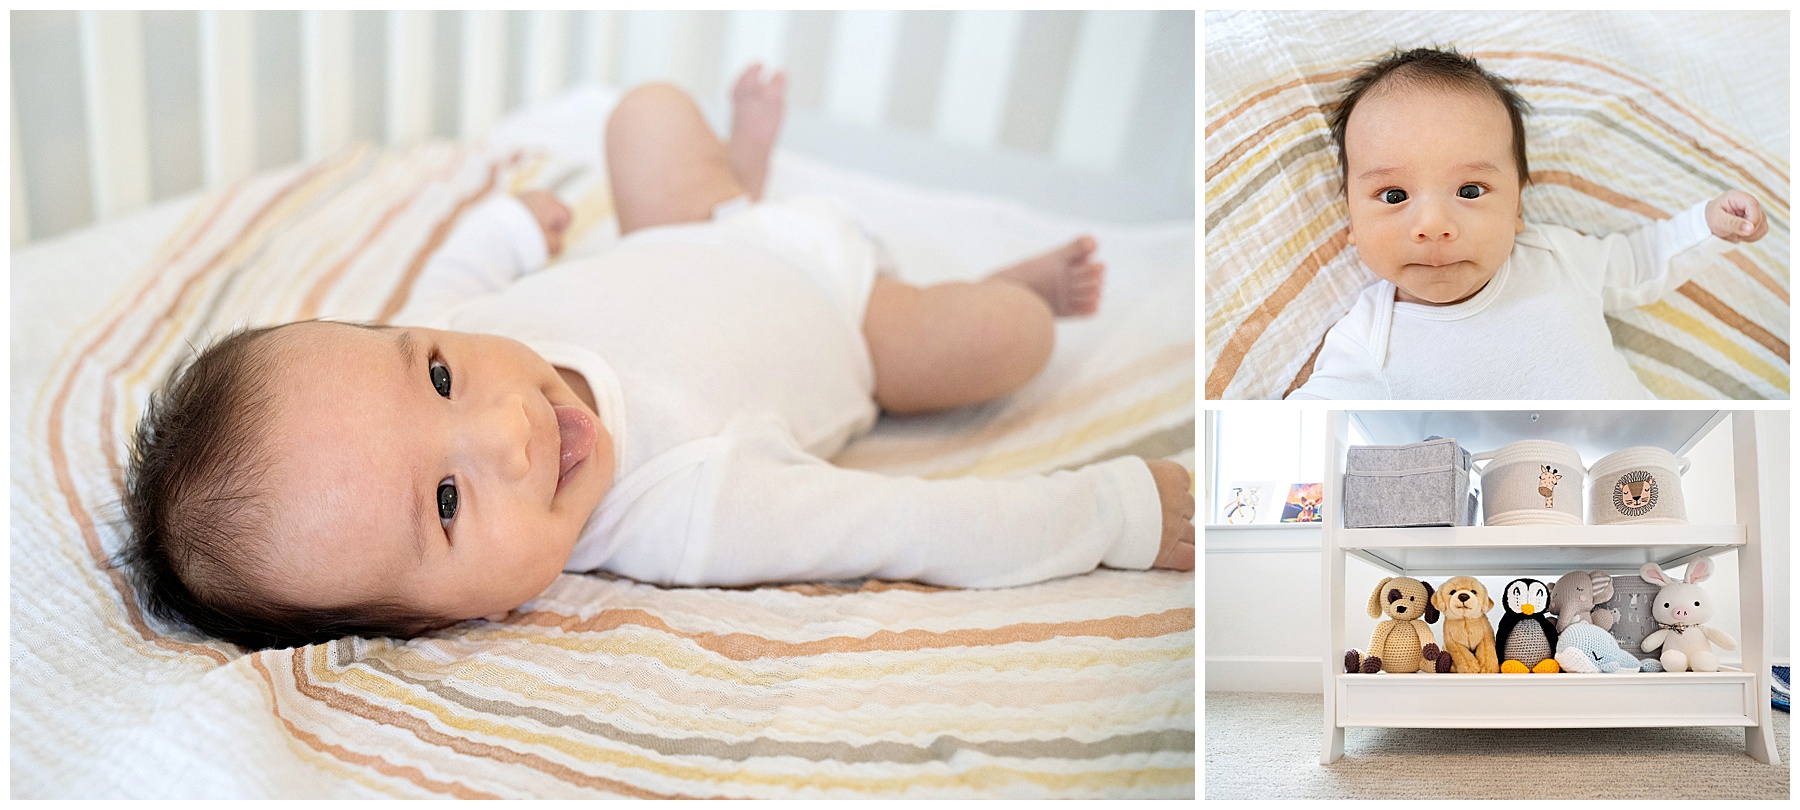 Newborn photos at home in nursery